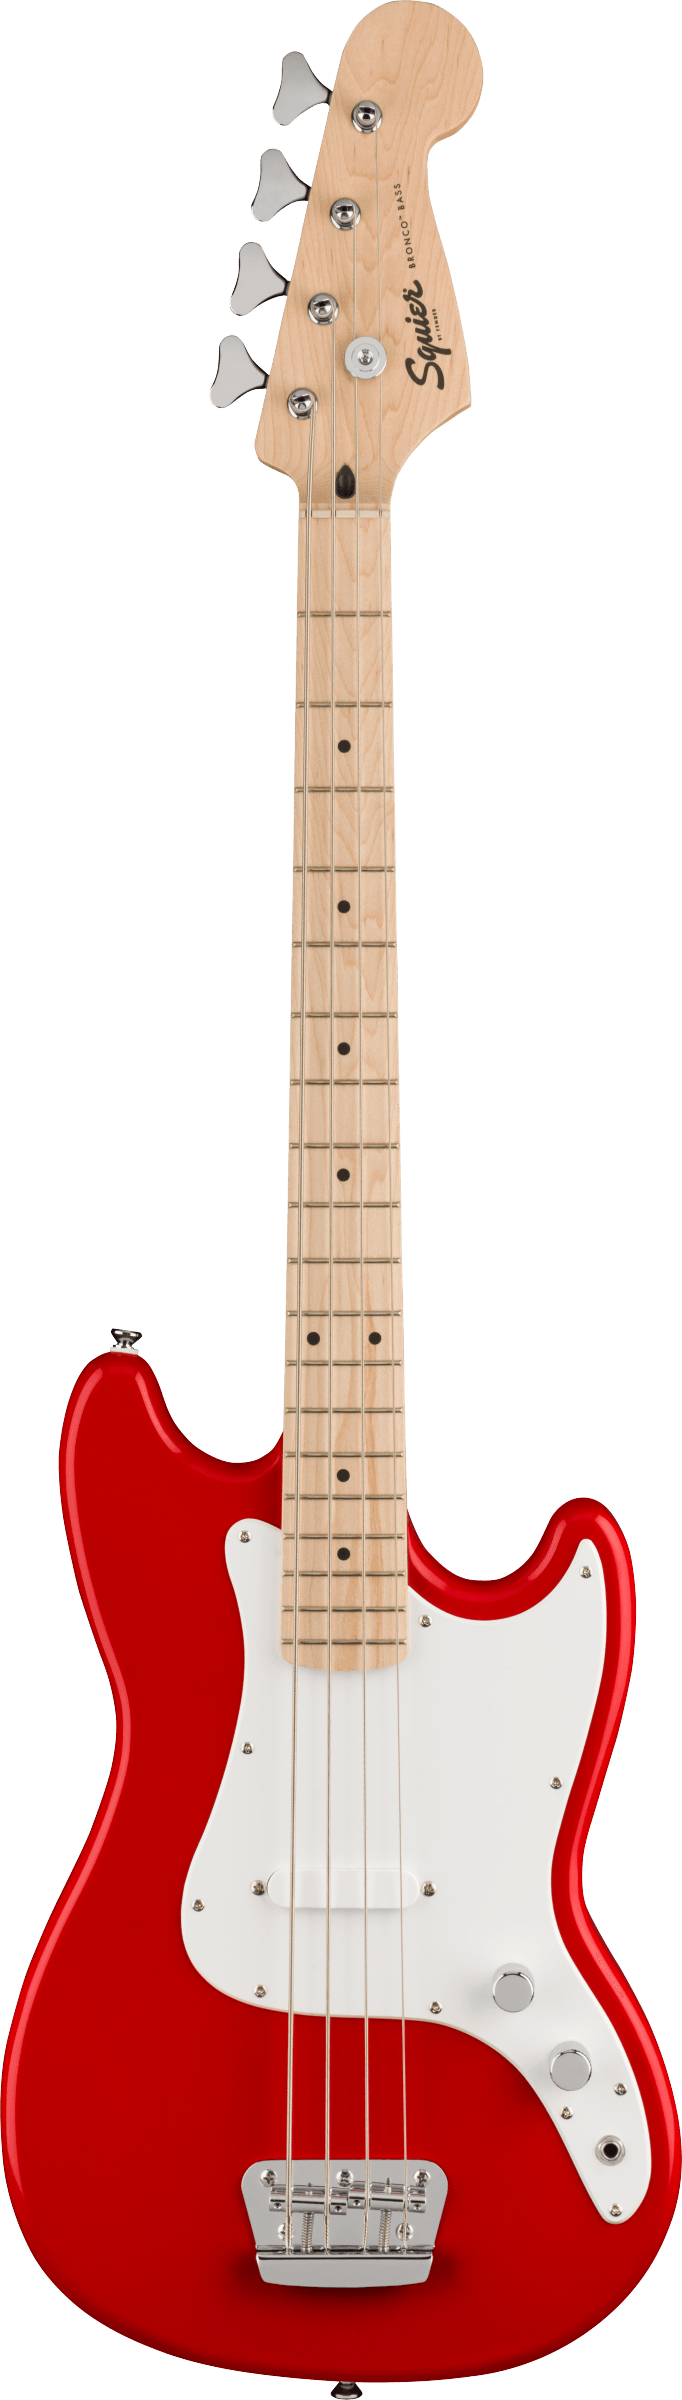 Torino Red Affinity Series Bronco Bass Guitar